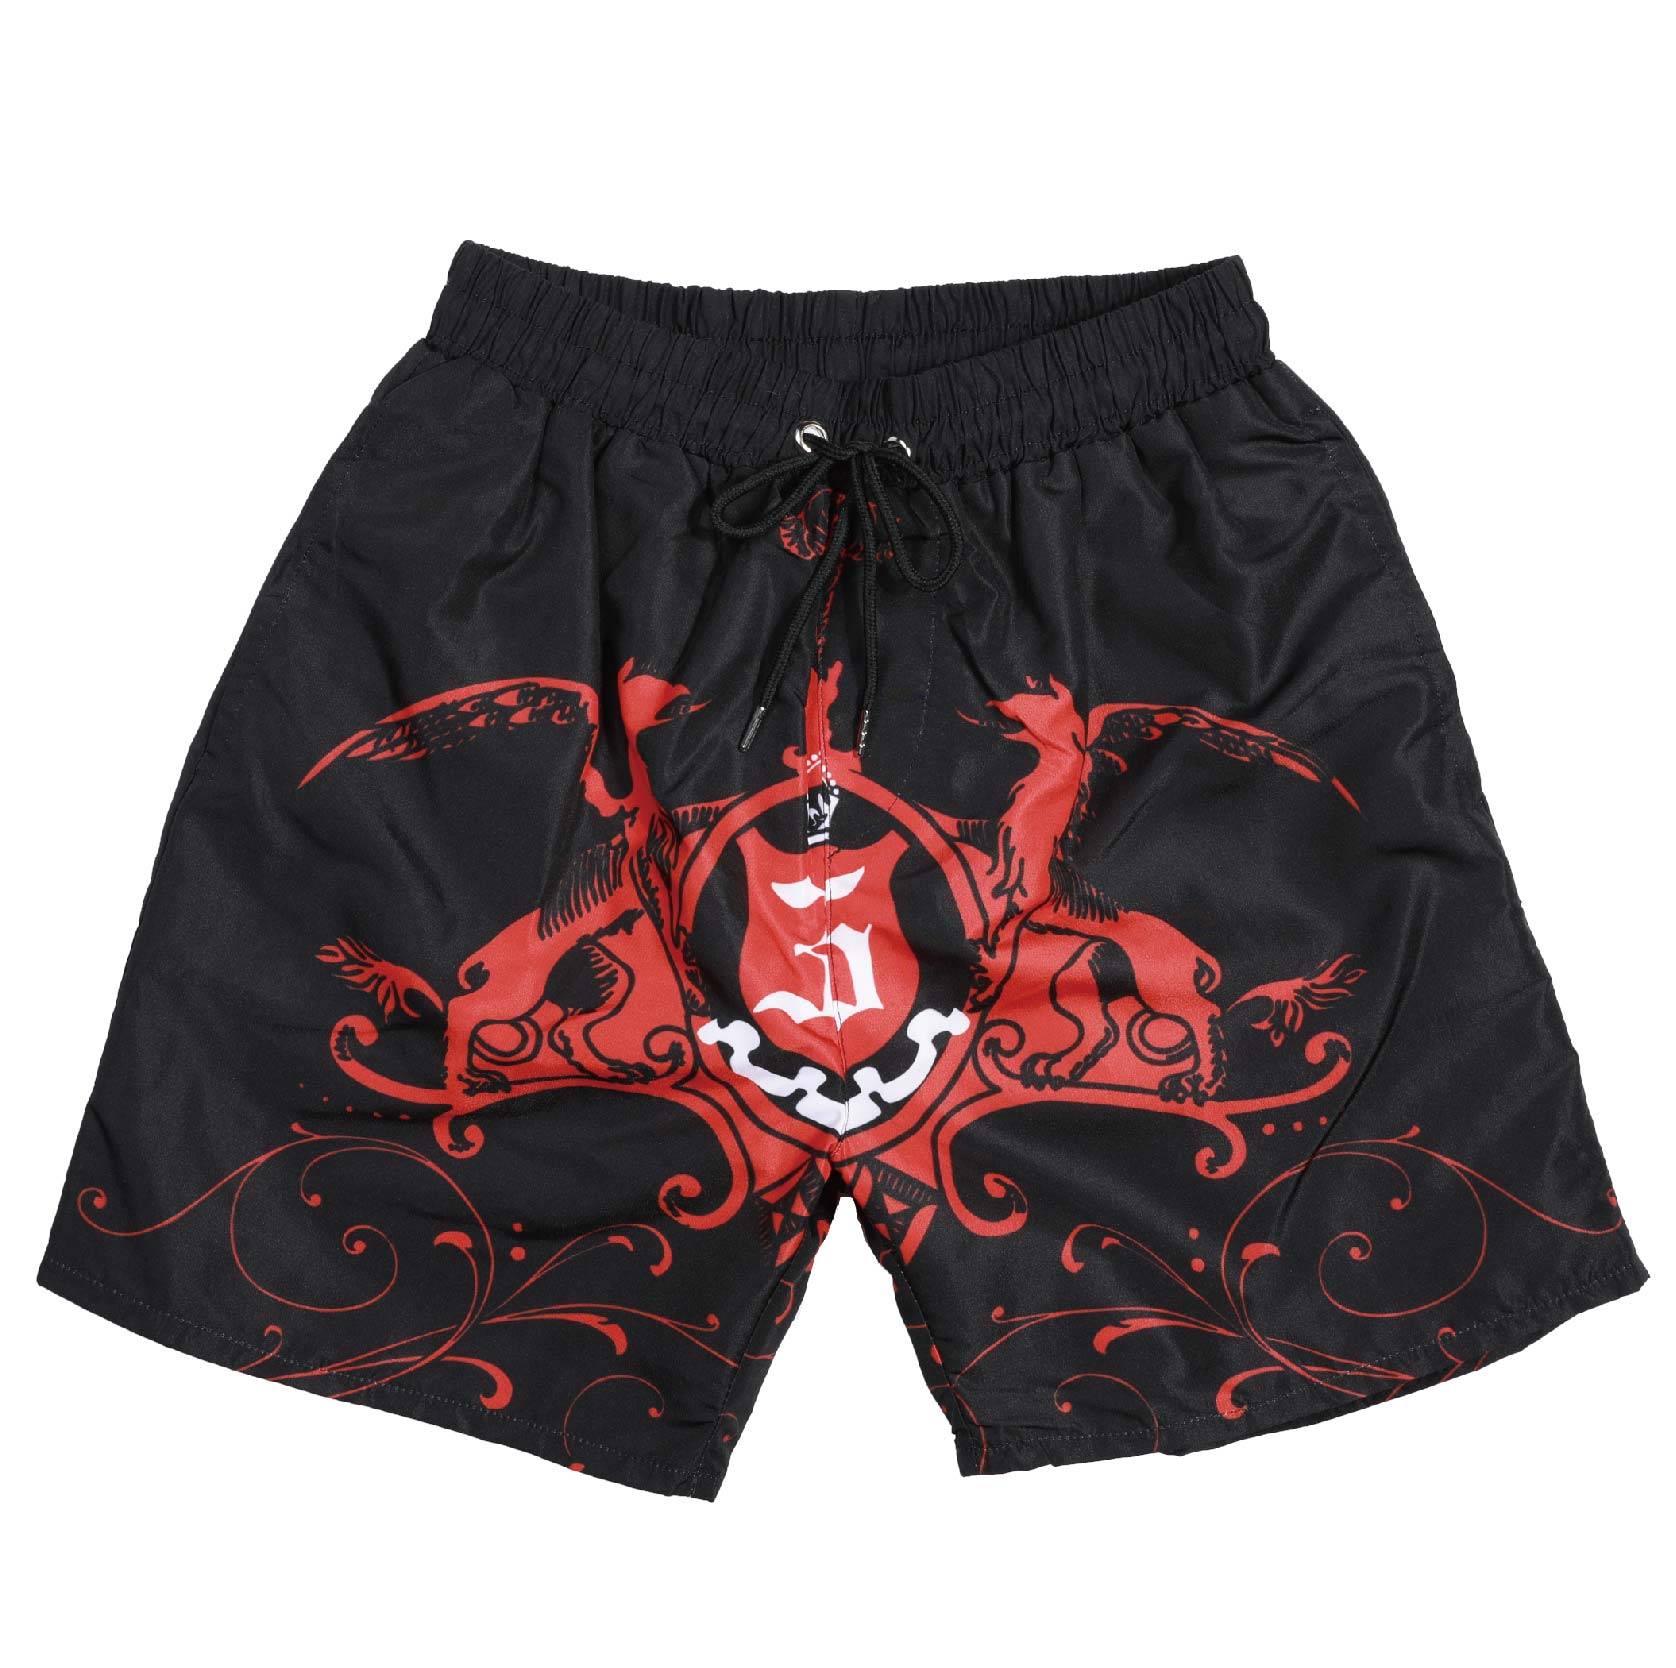 Good Quality Men Clothes - Ngozi Beach Shorts Men Quick Dry  black 35 Printed Elastic Waist – Fullerton